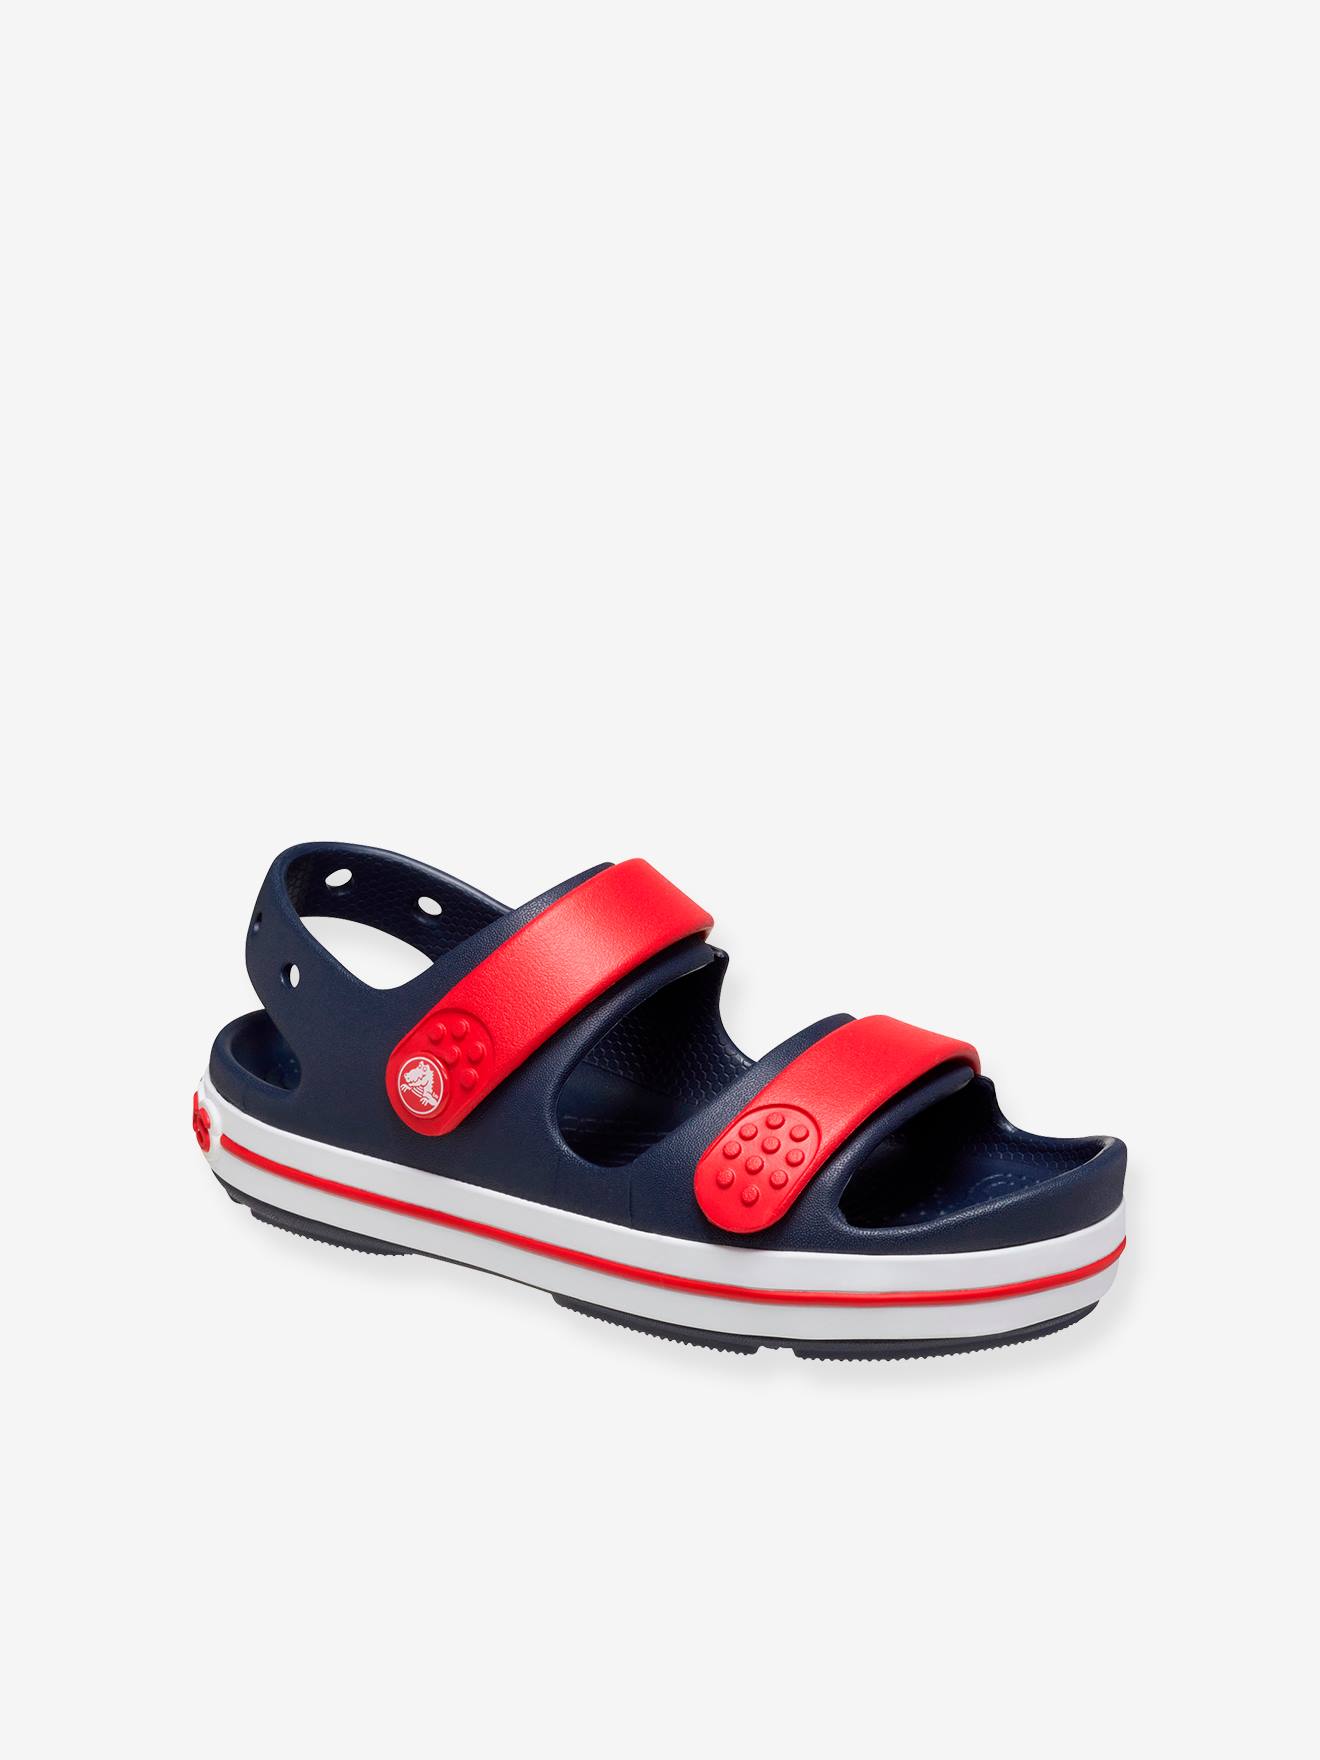 Zuecos infantiles 209423 de CROCSTM - Crocband Cruiser Sandal azul marino